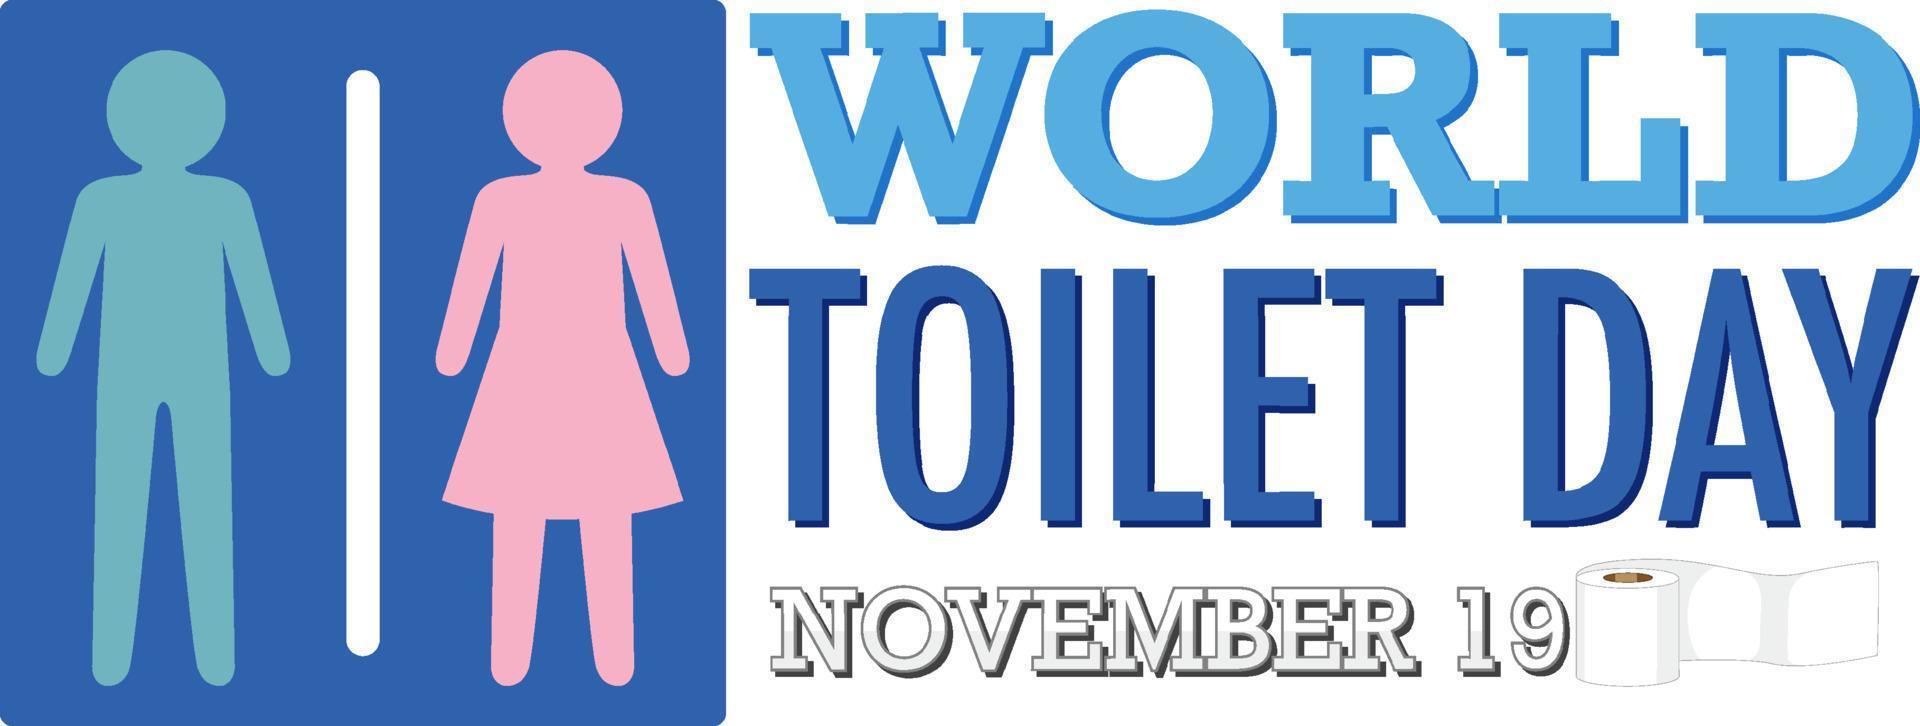 World toilet day text design vector